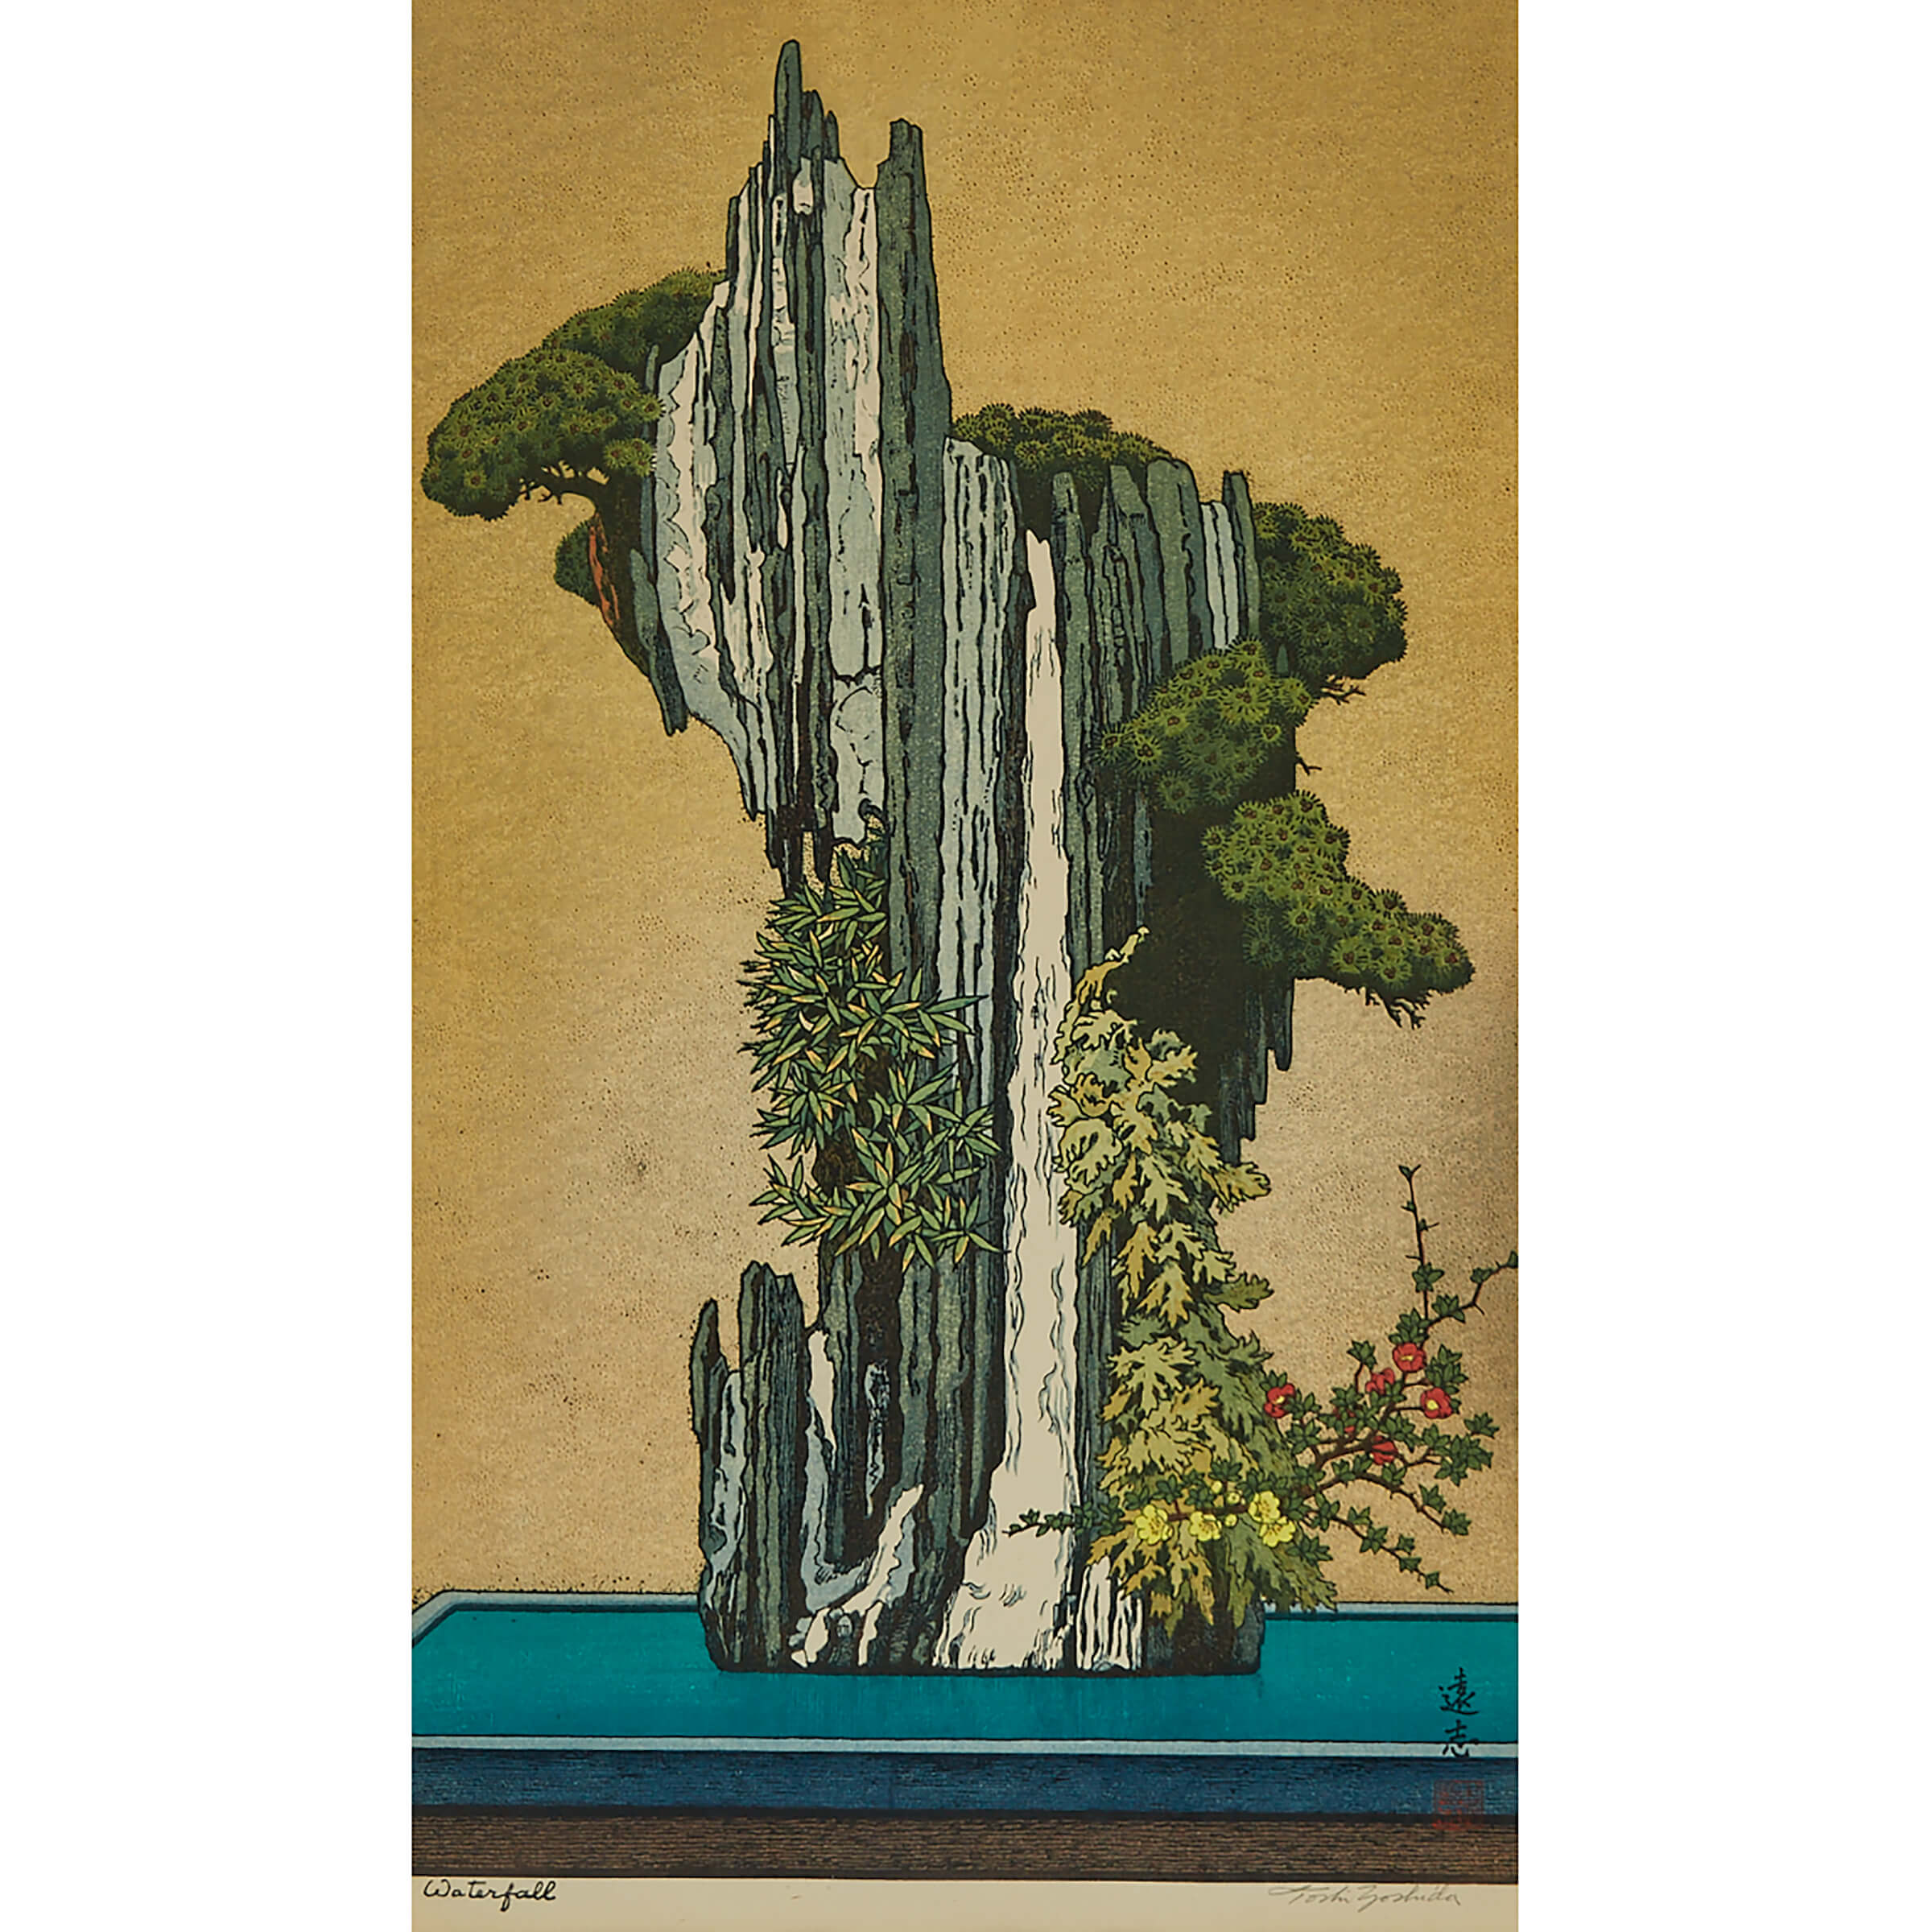 Toshi Yoshida (1911-1995), Waterfall